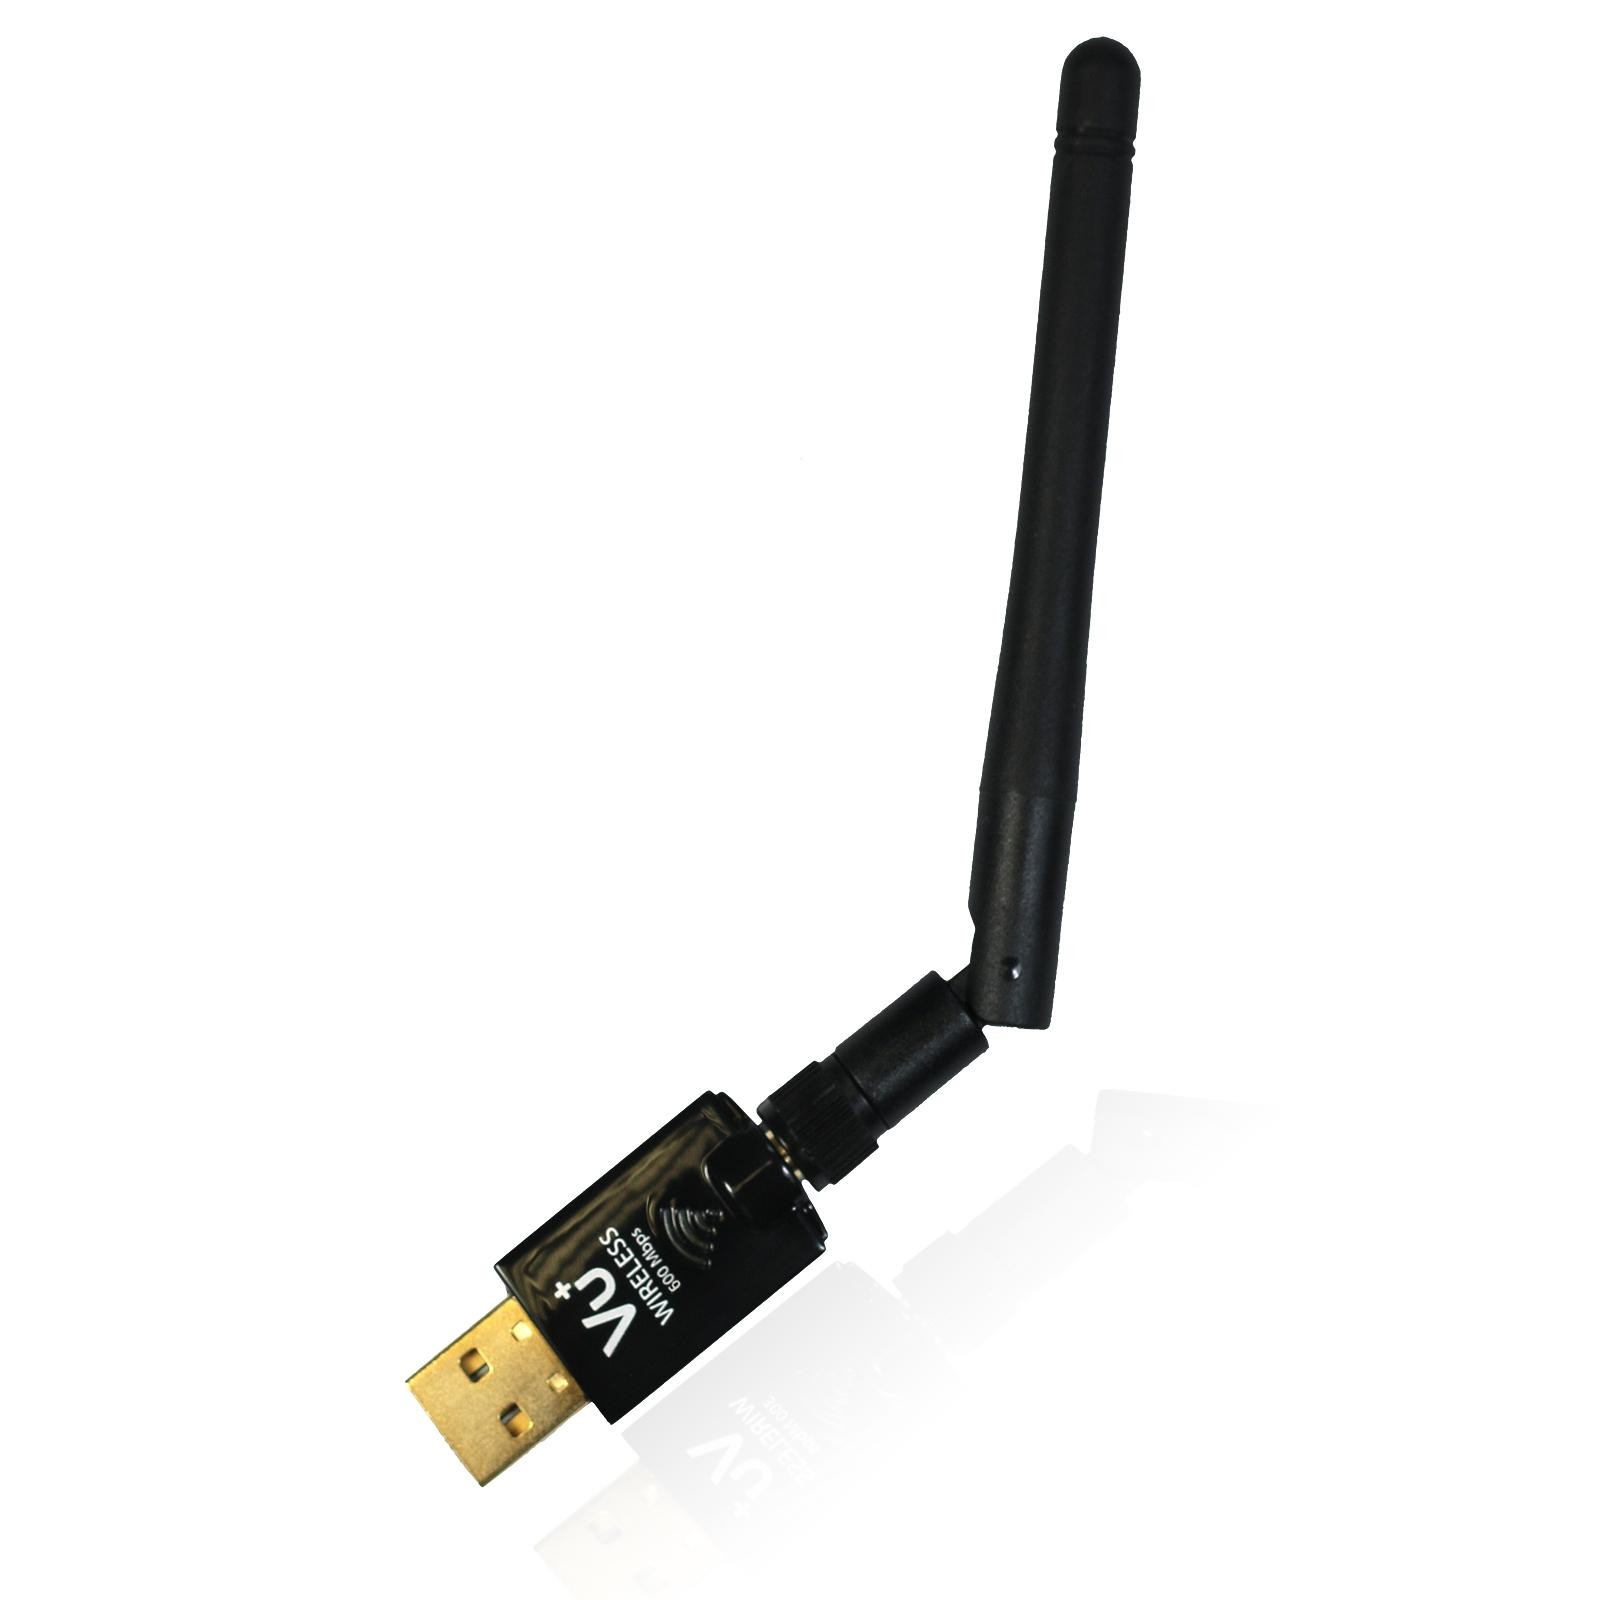 Gigablue Protek Octagon Protek Babotech USB Wlan Stick 150Mbit/s Wifi für VU 2dB 